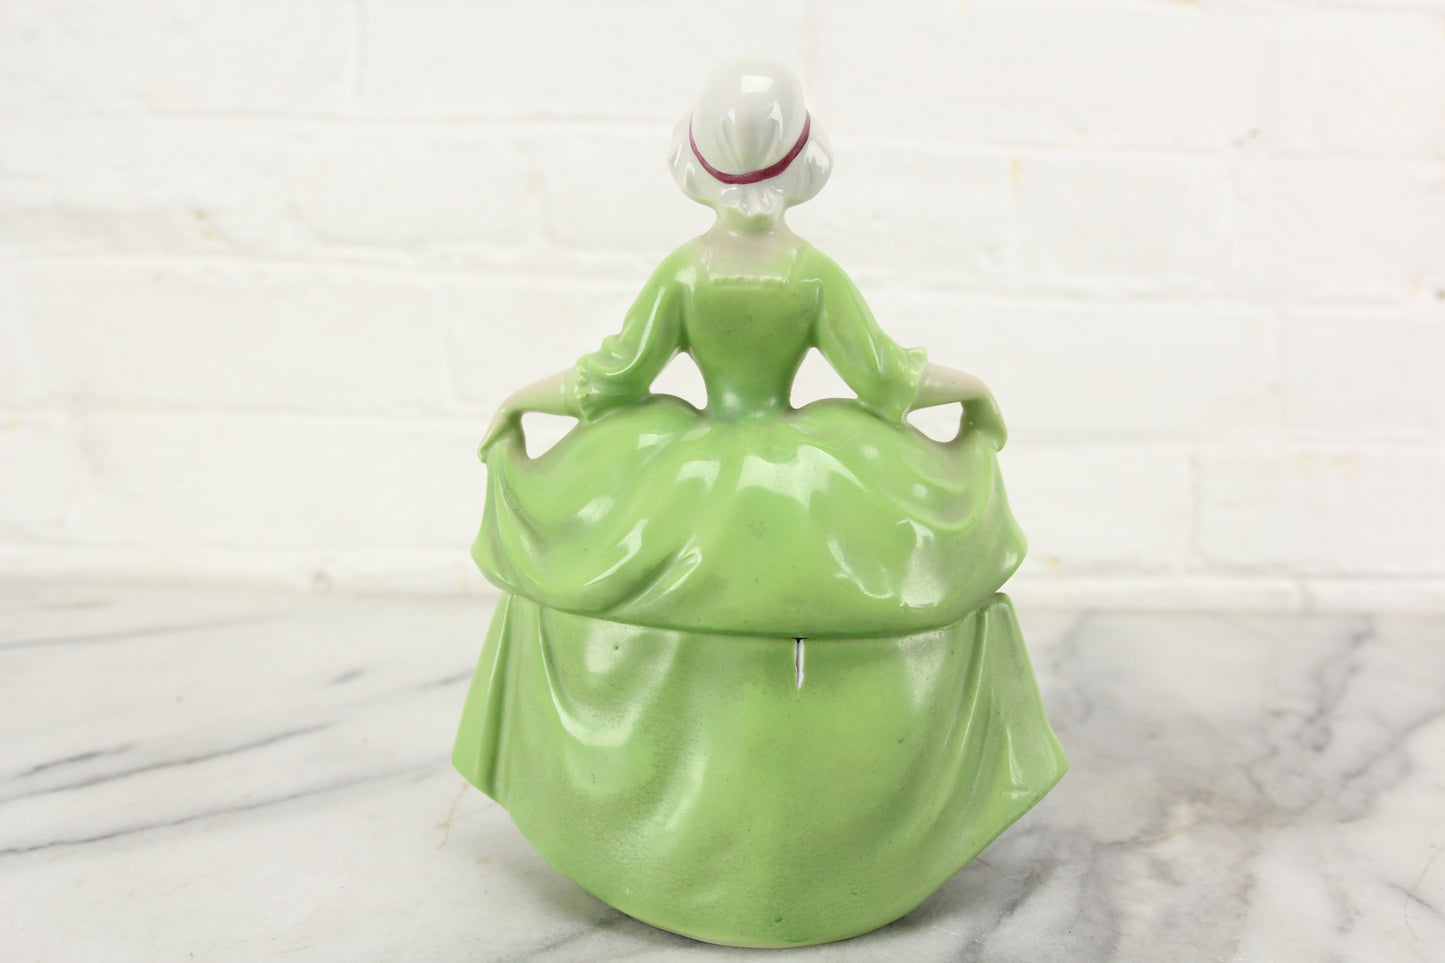 Madame Pompadour Porcelain Ceramic Dresser Doll E&R Powder Trinket Box, Made in Germany